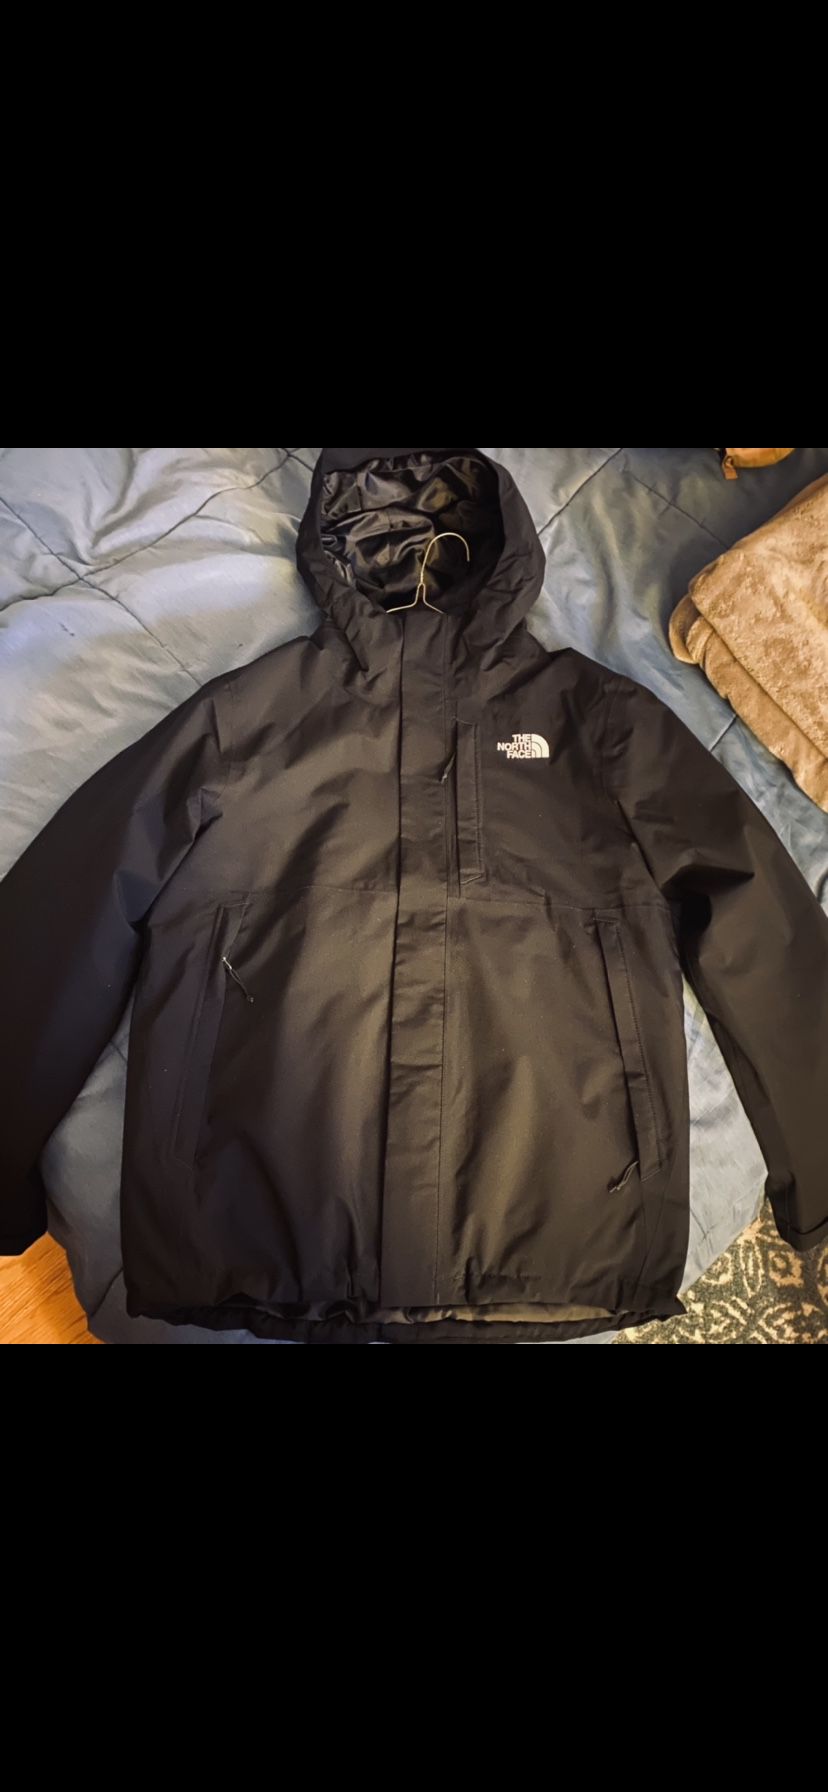 Mens Northface Jacket *Brand New* (includes lining fleece jacket) Size M